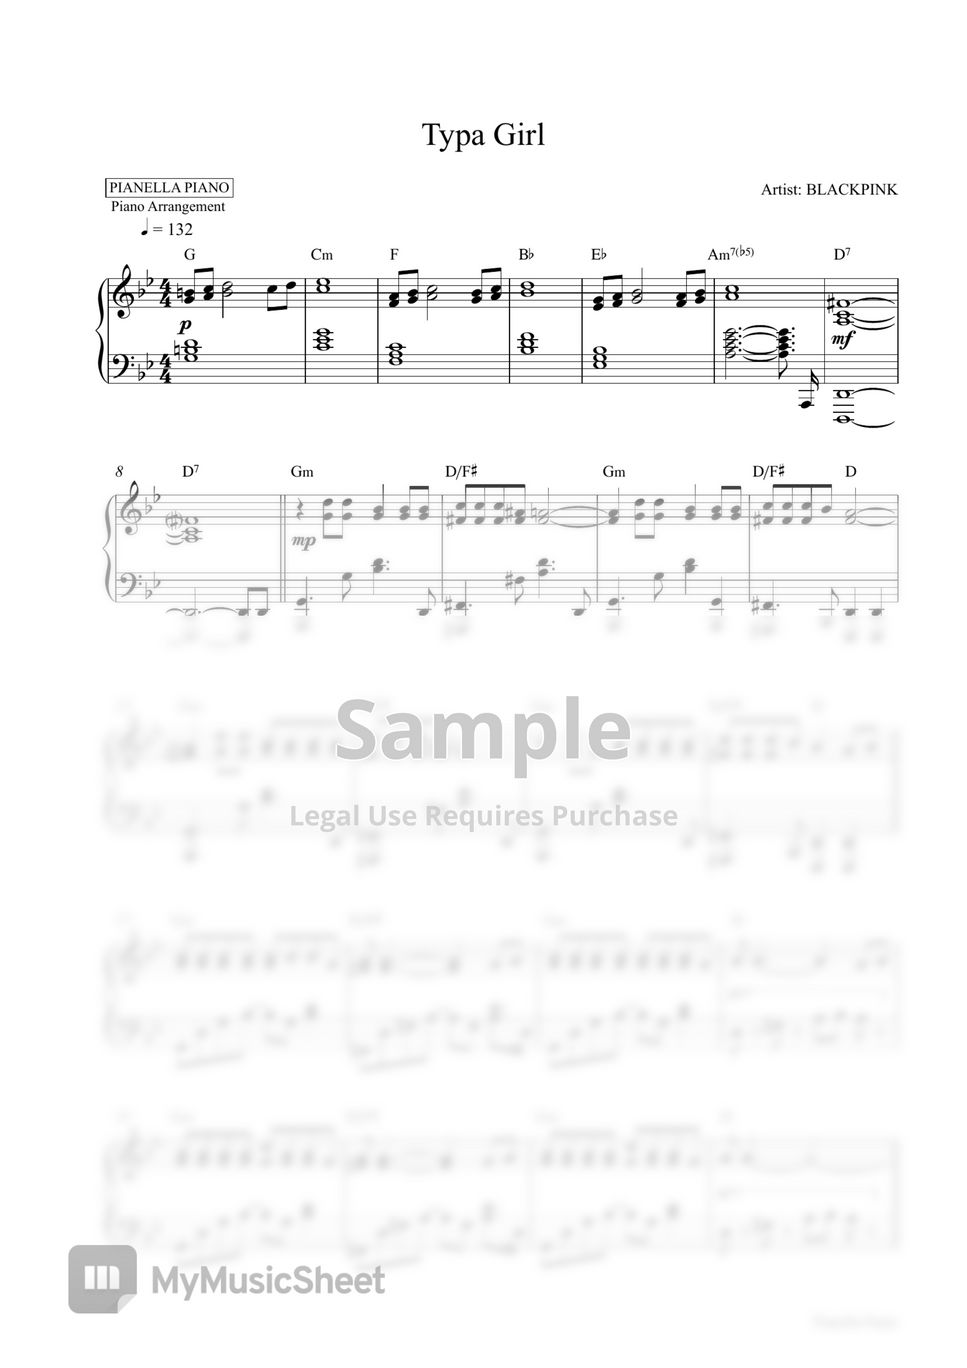 BLACKPINK - Typa Girl (Piano Sheet) by Pianella Piano